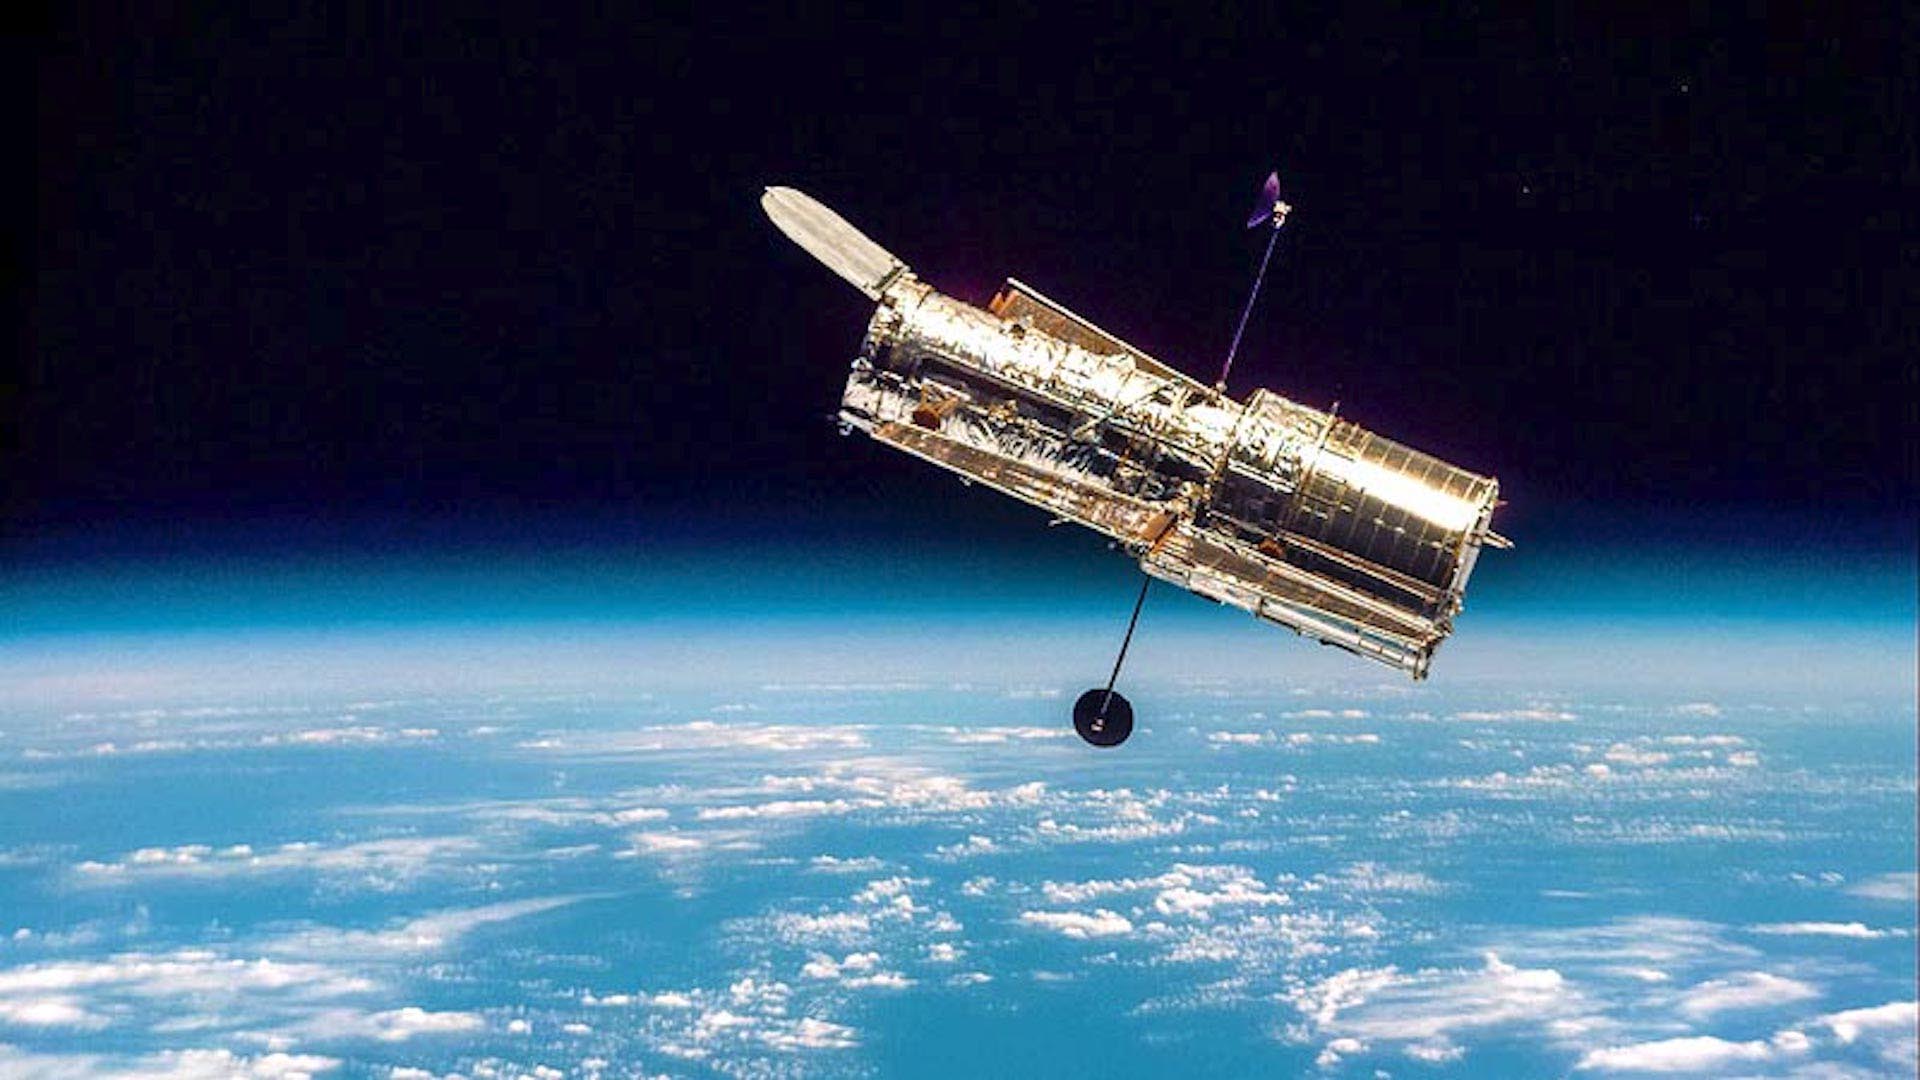 Hubble space telescope.